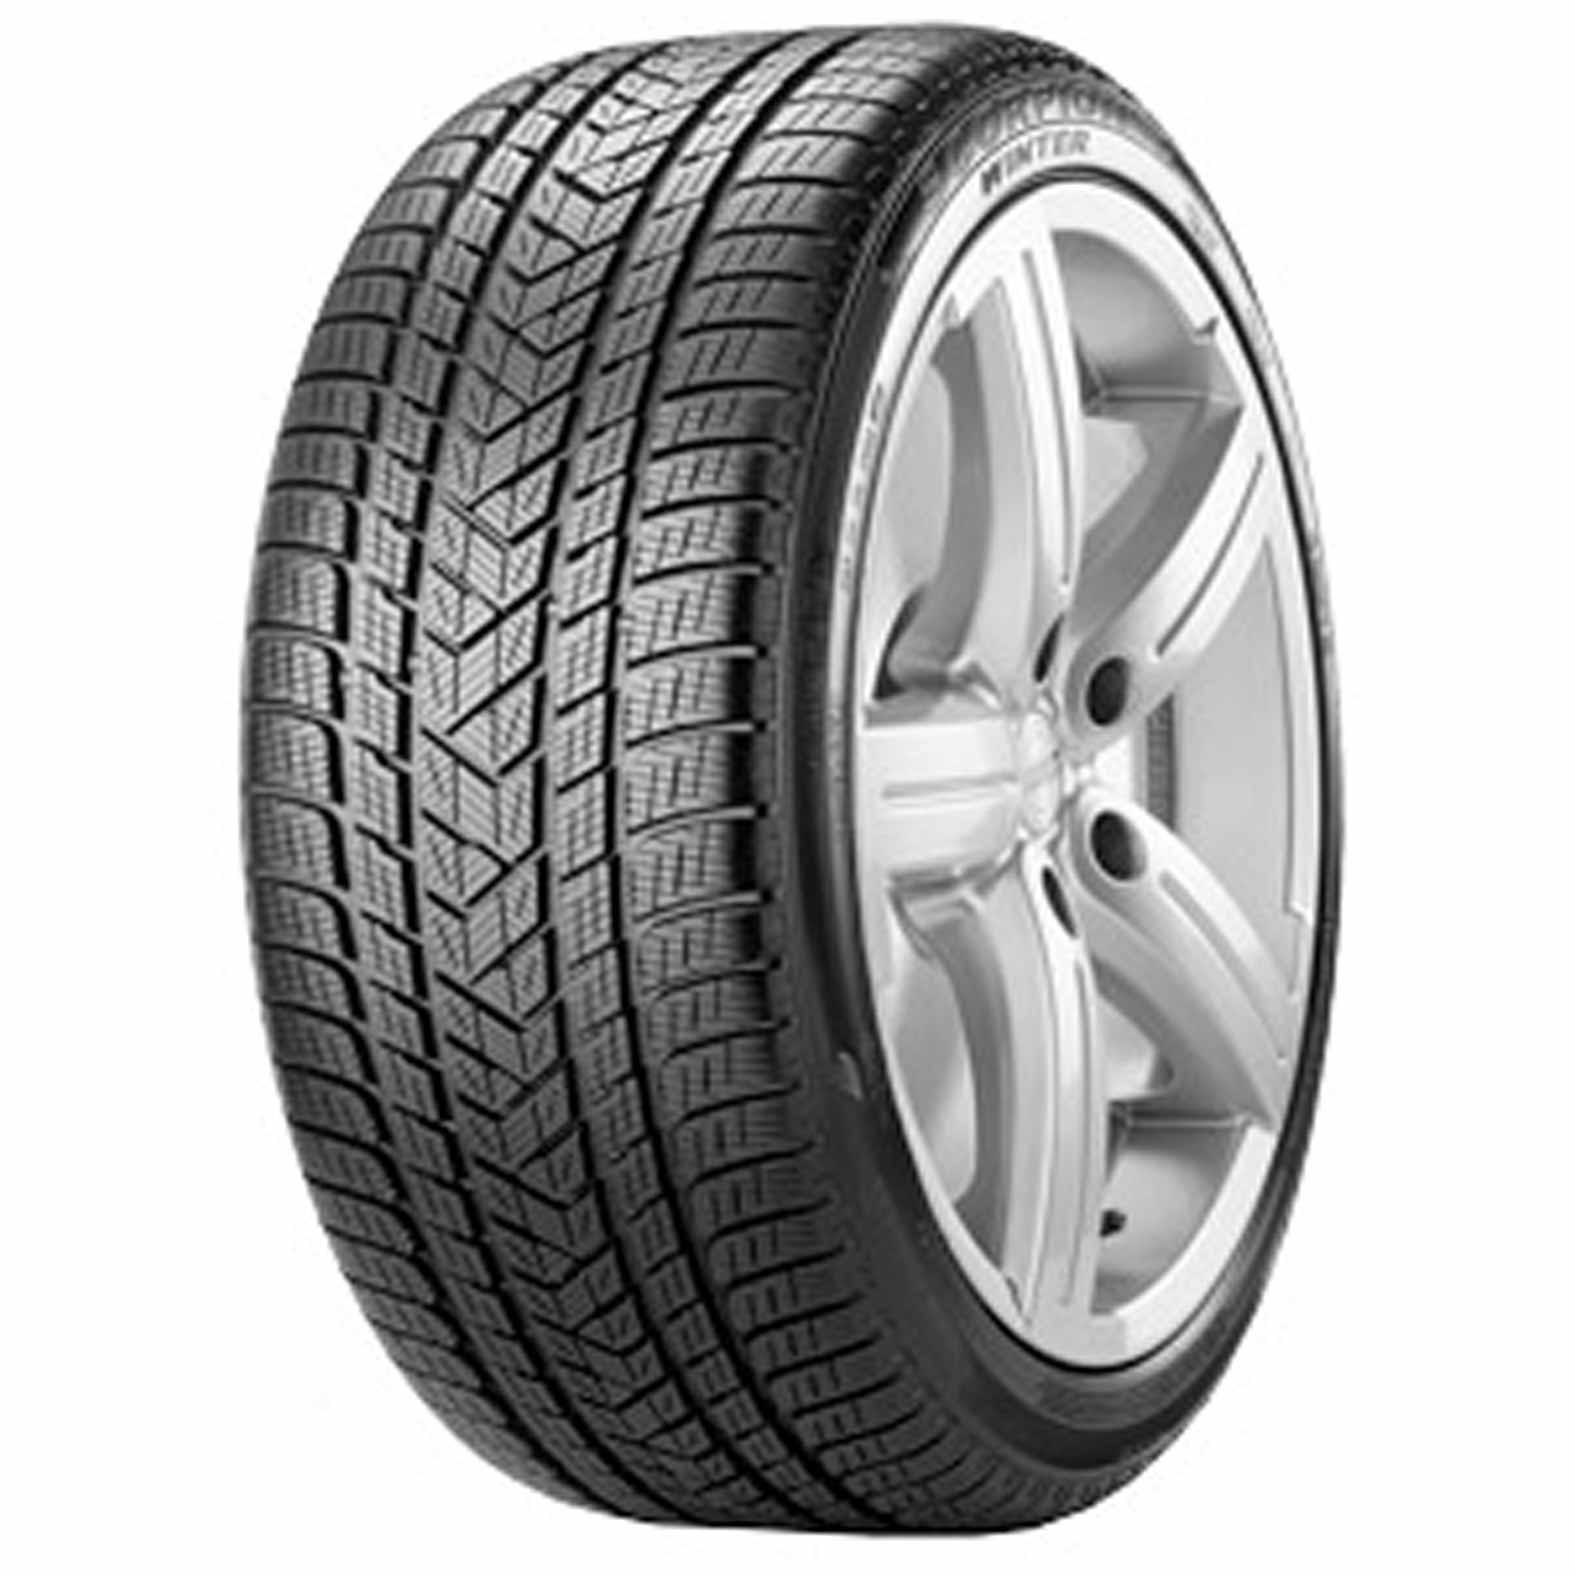 Winter | Kal Winter Tire Scorpion Tires Pirelli for